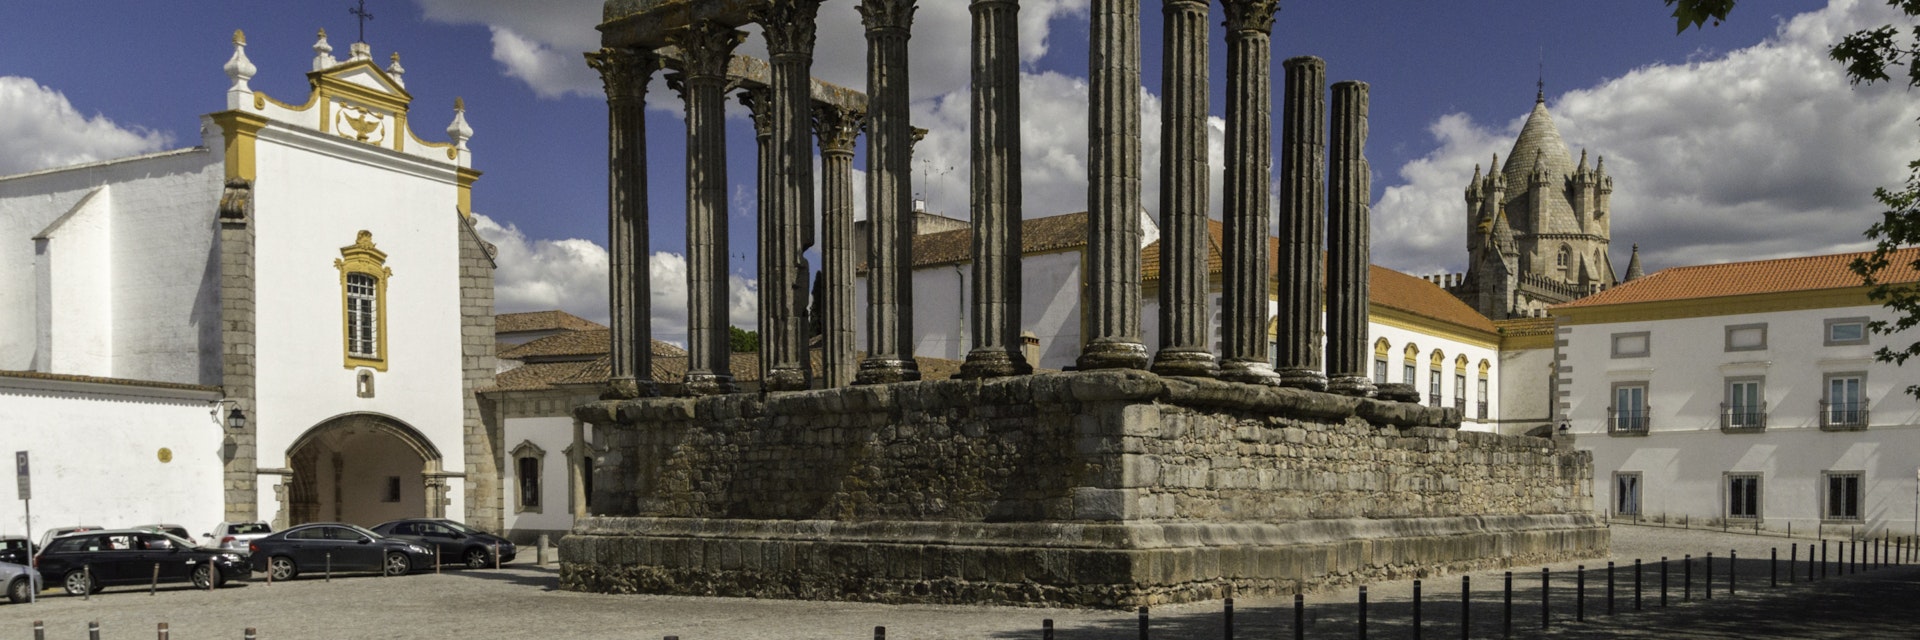 Roman temple of Diana, Evora, Portugal